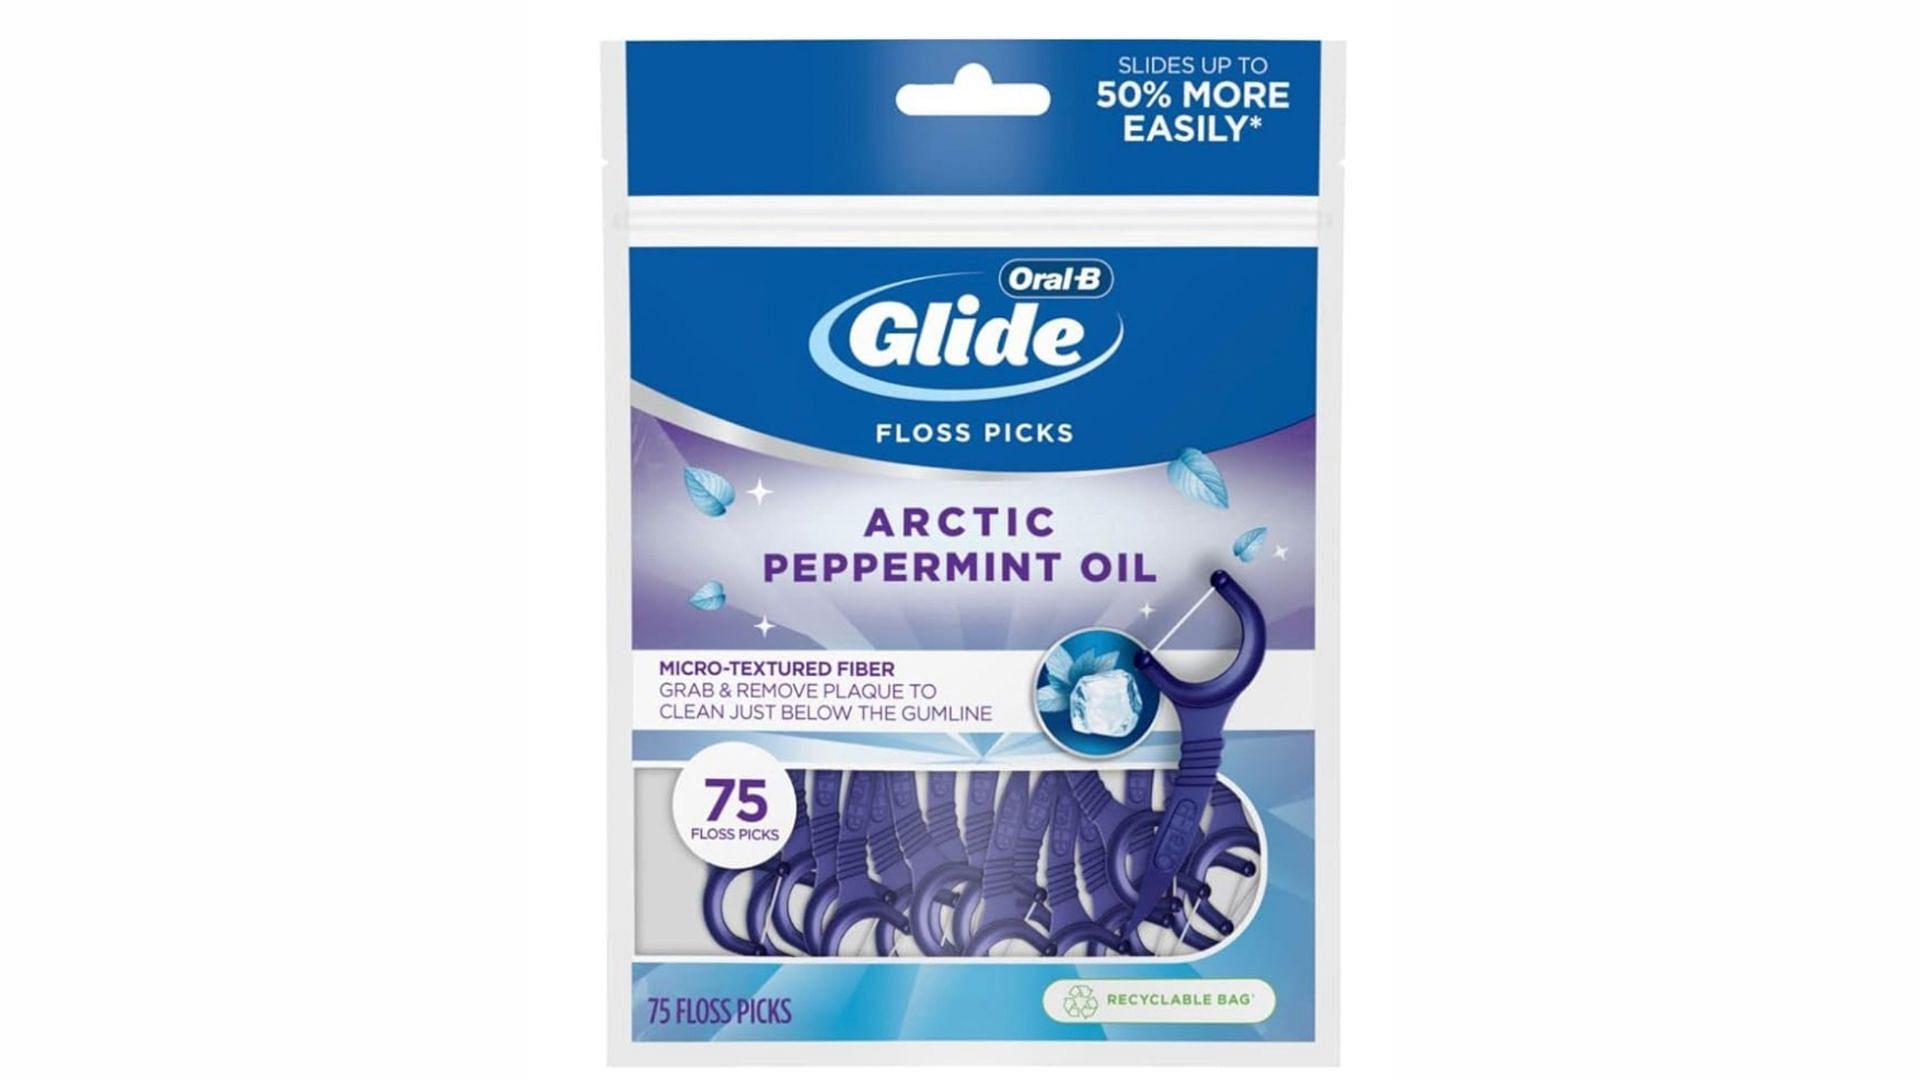 Arctic Peppermint Oil floss picks (Image via Amazon)